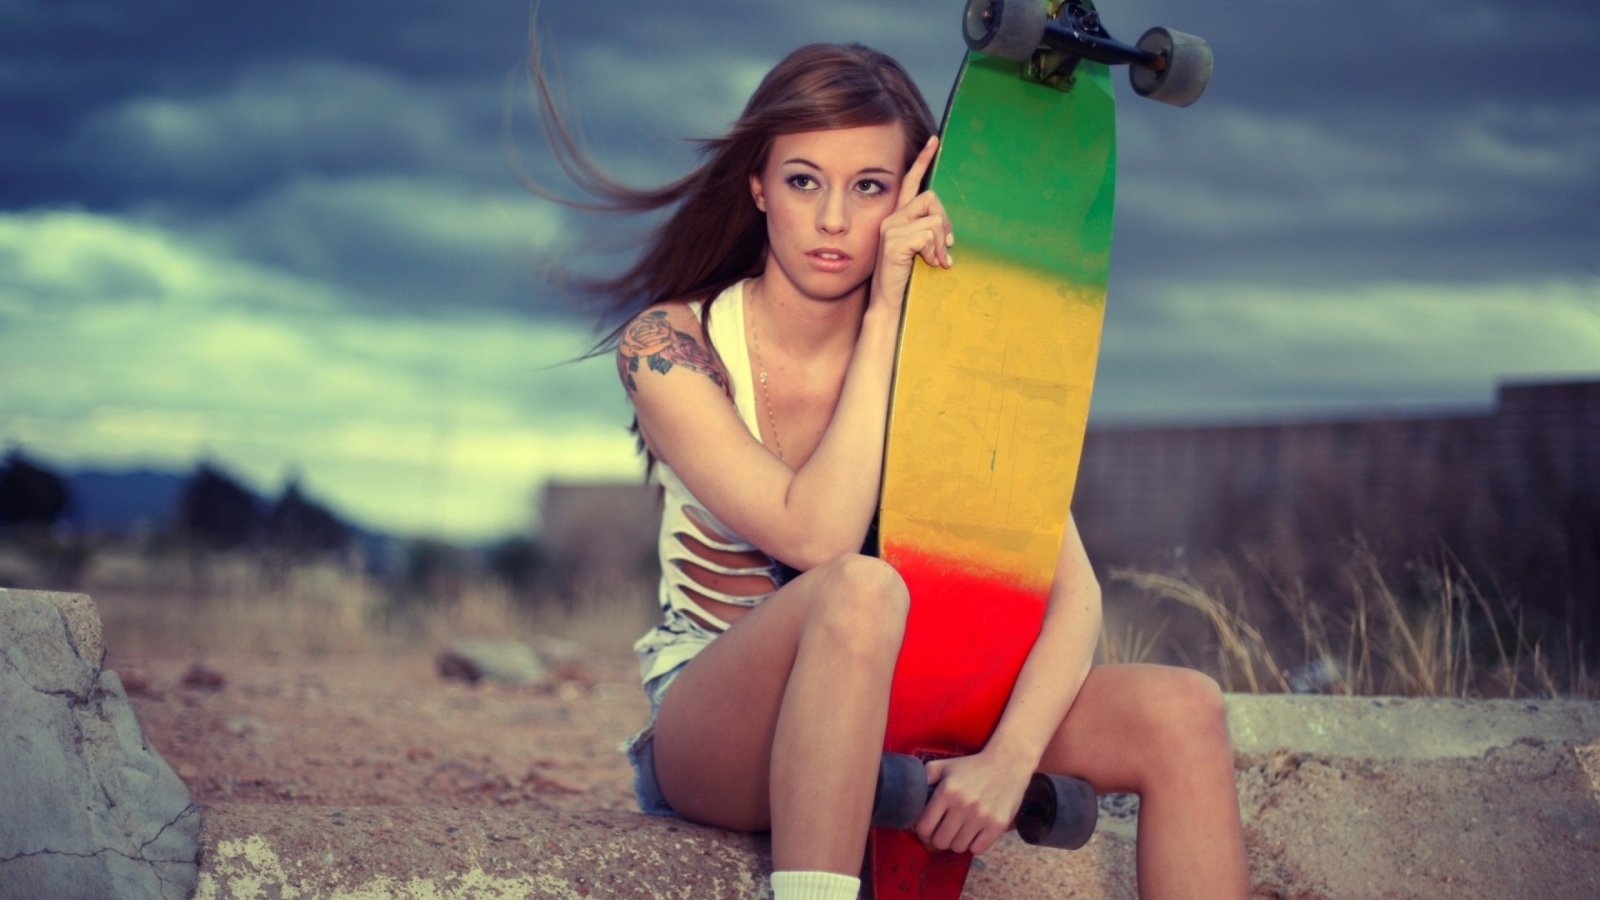 Sporty girl and skateboard